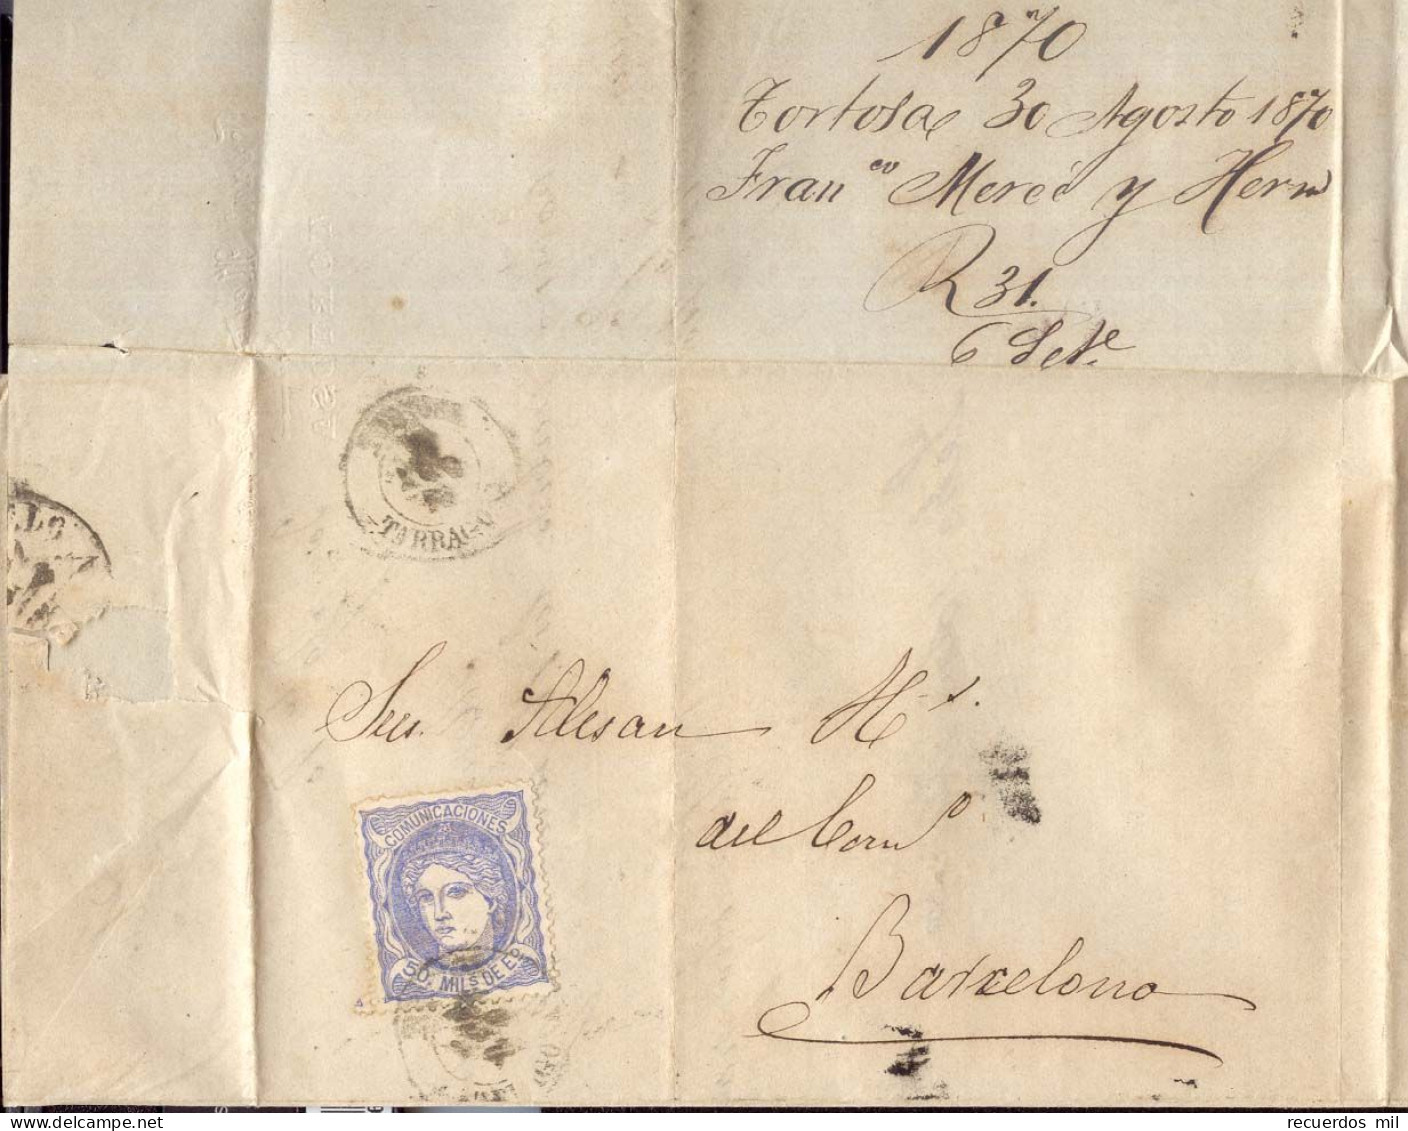 Año 1870 Edifil 107 Alegoria Carta  Matasellos Tortosa Tarragona Membrete Francisco Merce Y Hermano - Briefe U. Dokumente